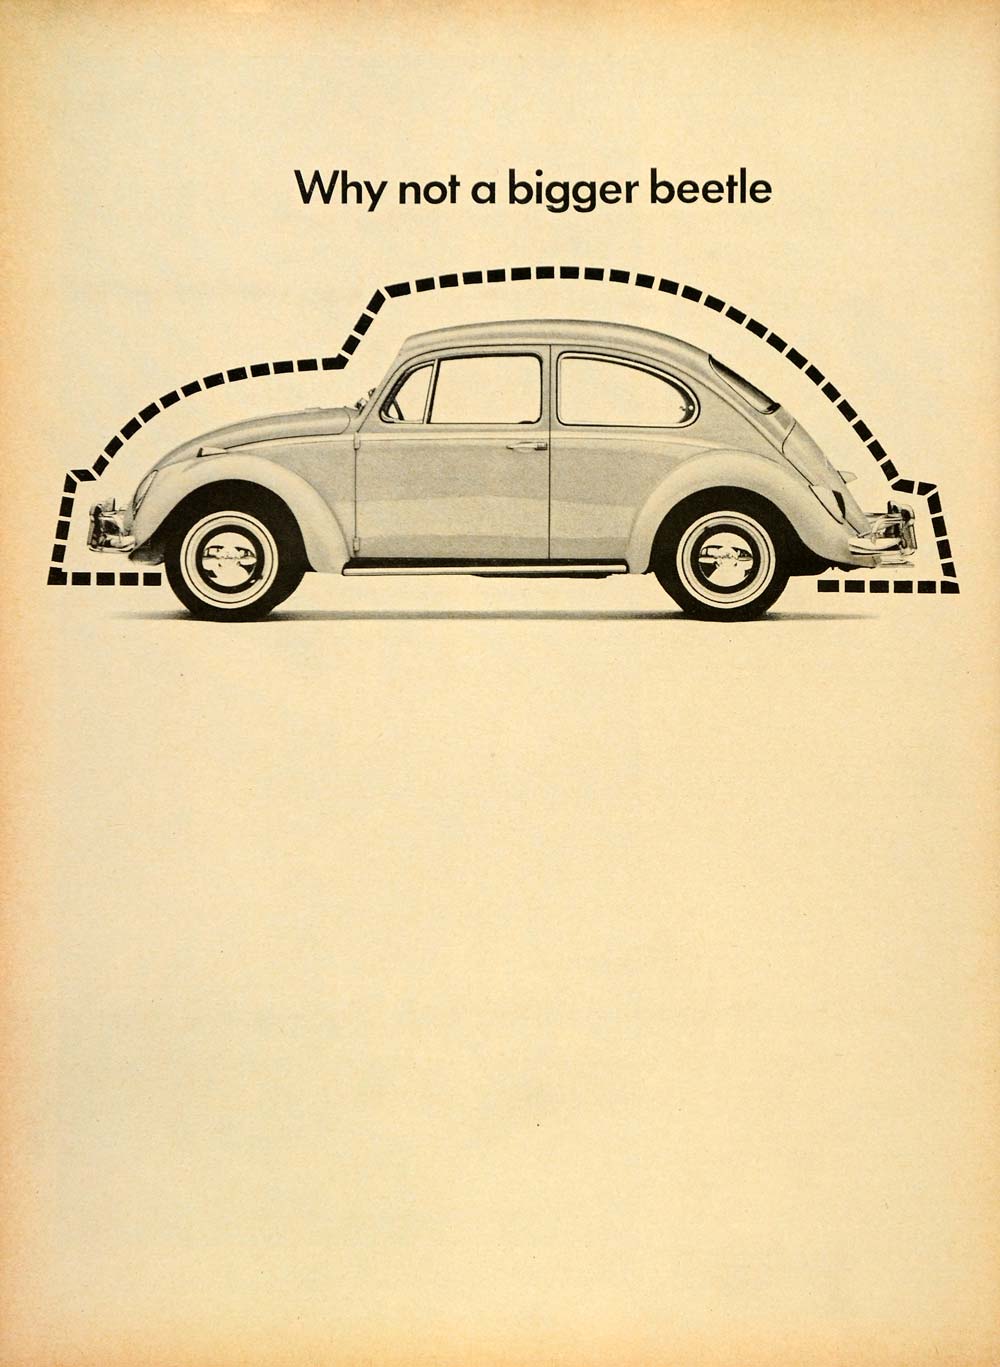 1965 Ad Volkswagen Fastback Sedan Automobile Vintage - ORIGINAL CARS7